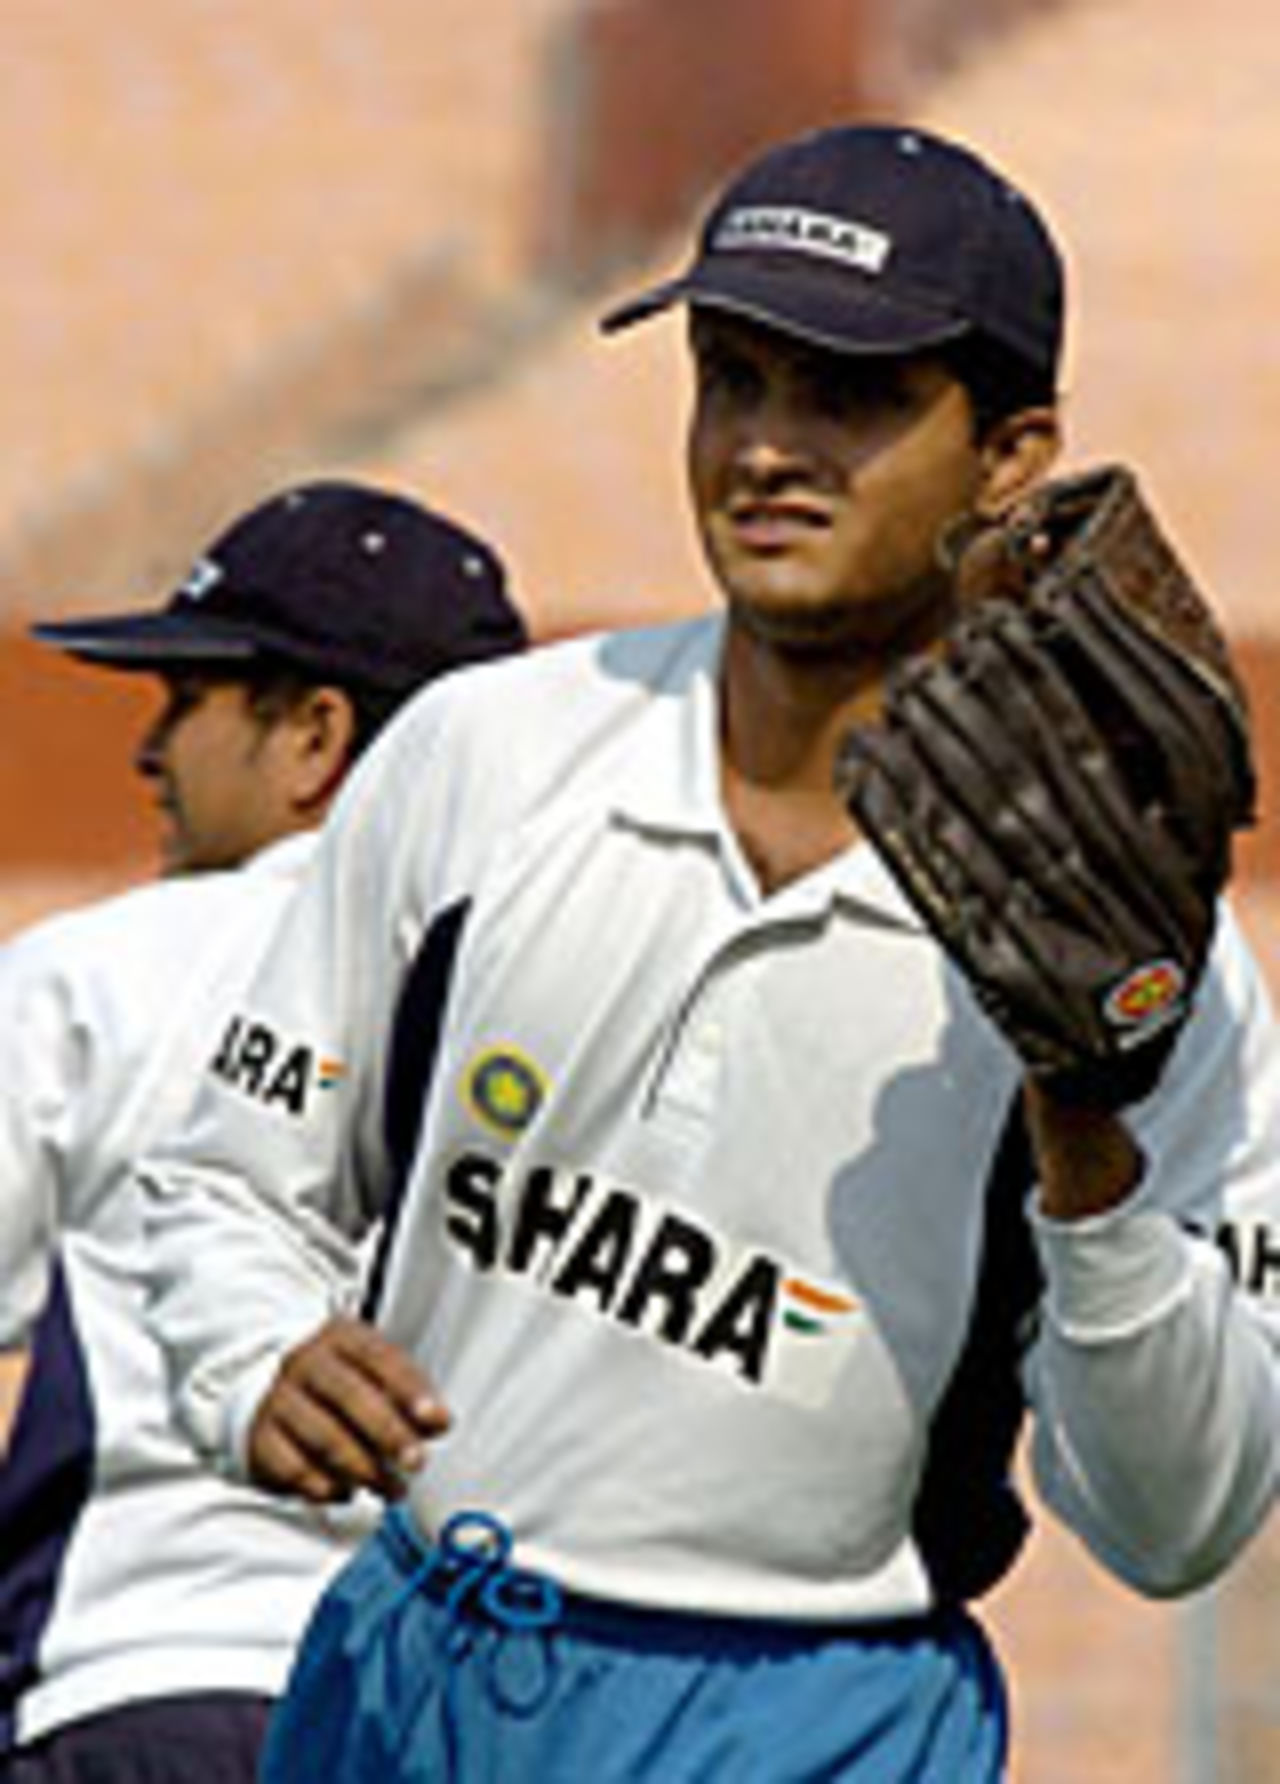 Sourav Ganguly with a baseball glove, Kolkata, November 26 2004